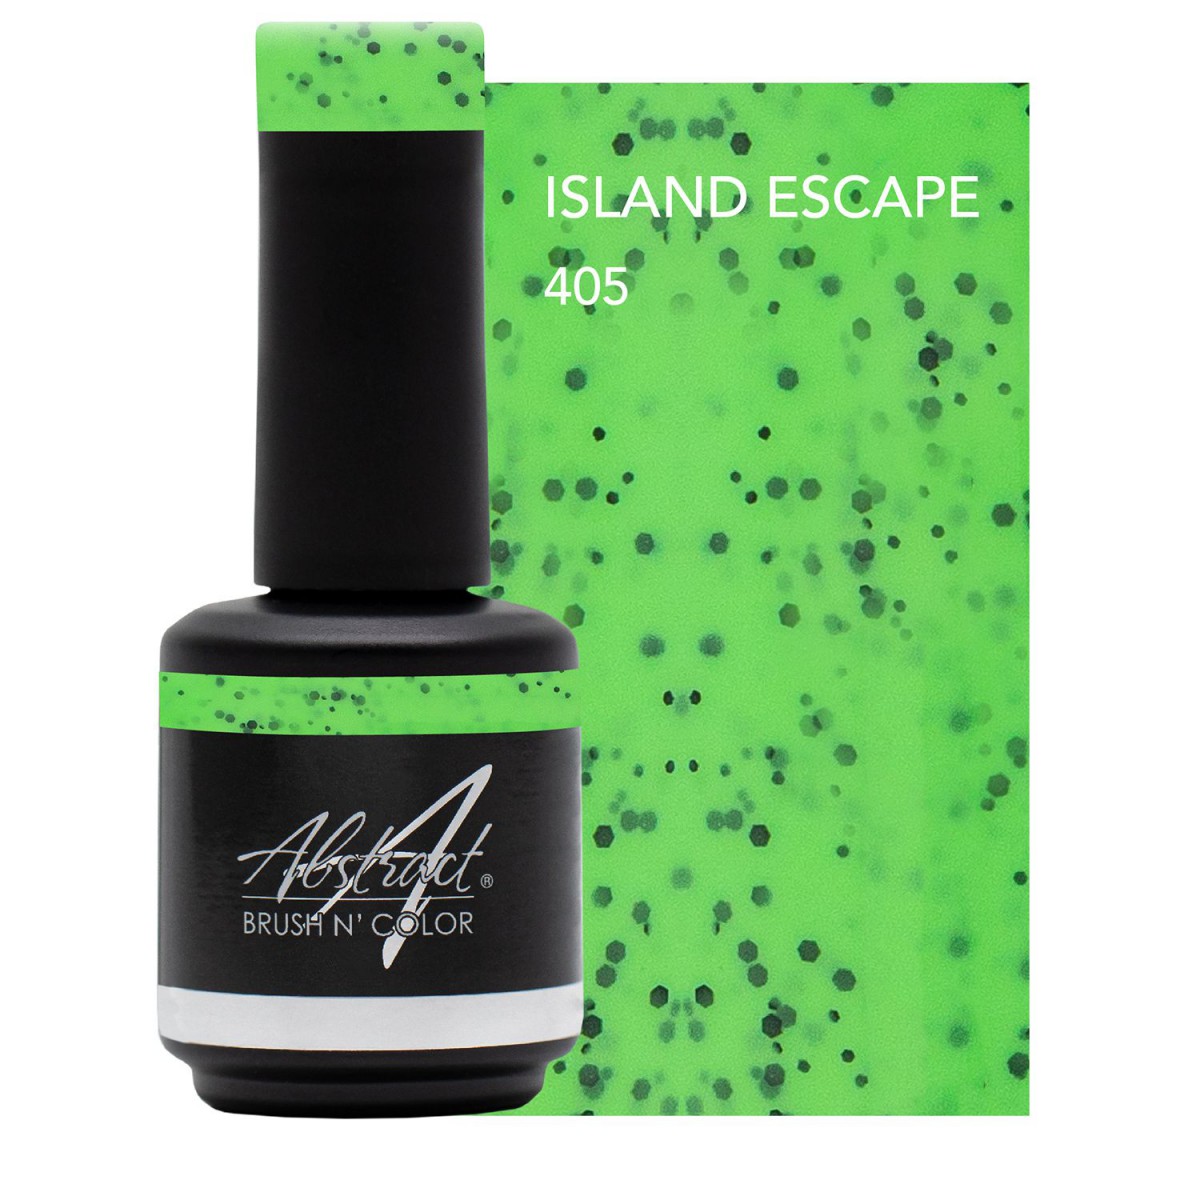 Abstract Island escape15 ml